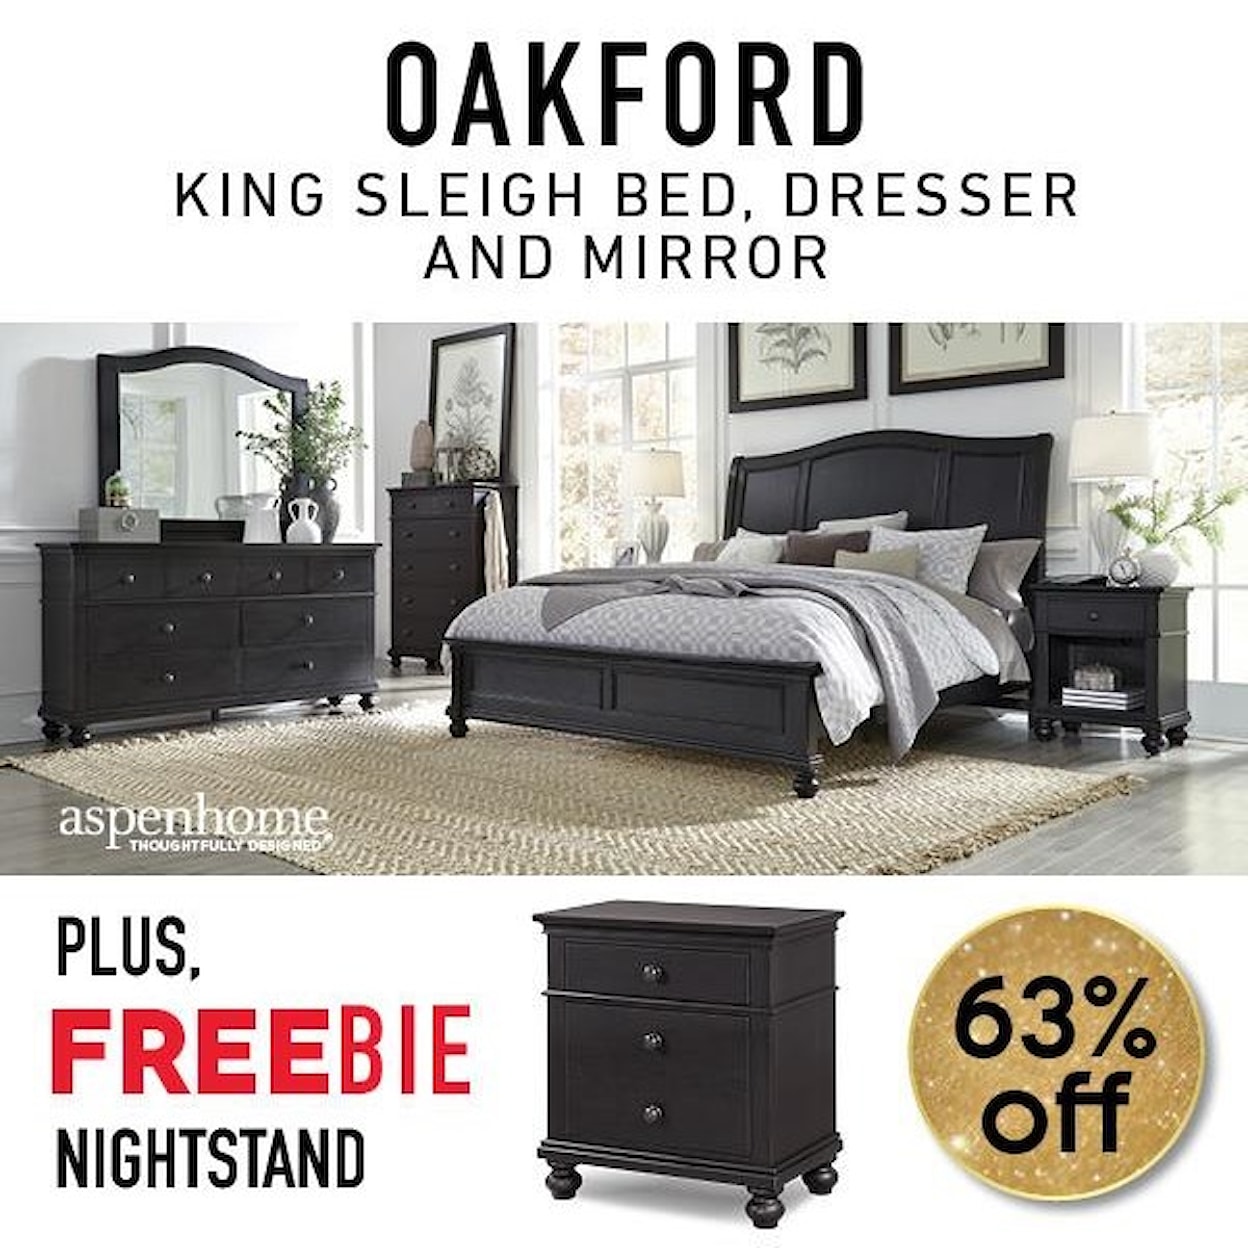 Aspenhome Oakford Oakford King Bedroom Package with FREEBIE!